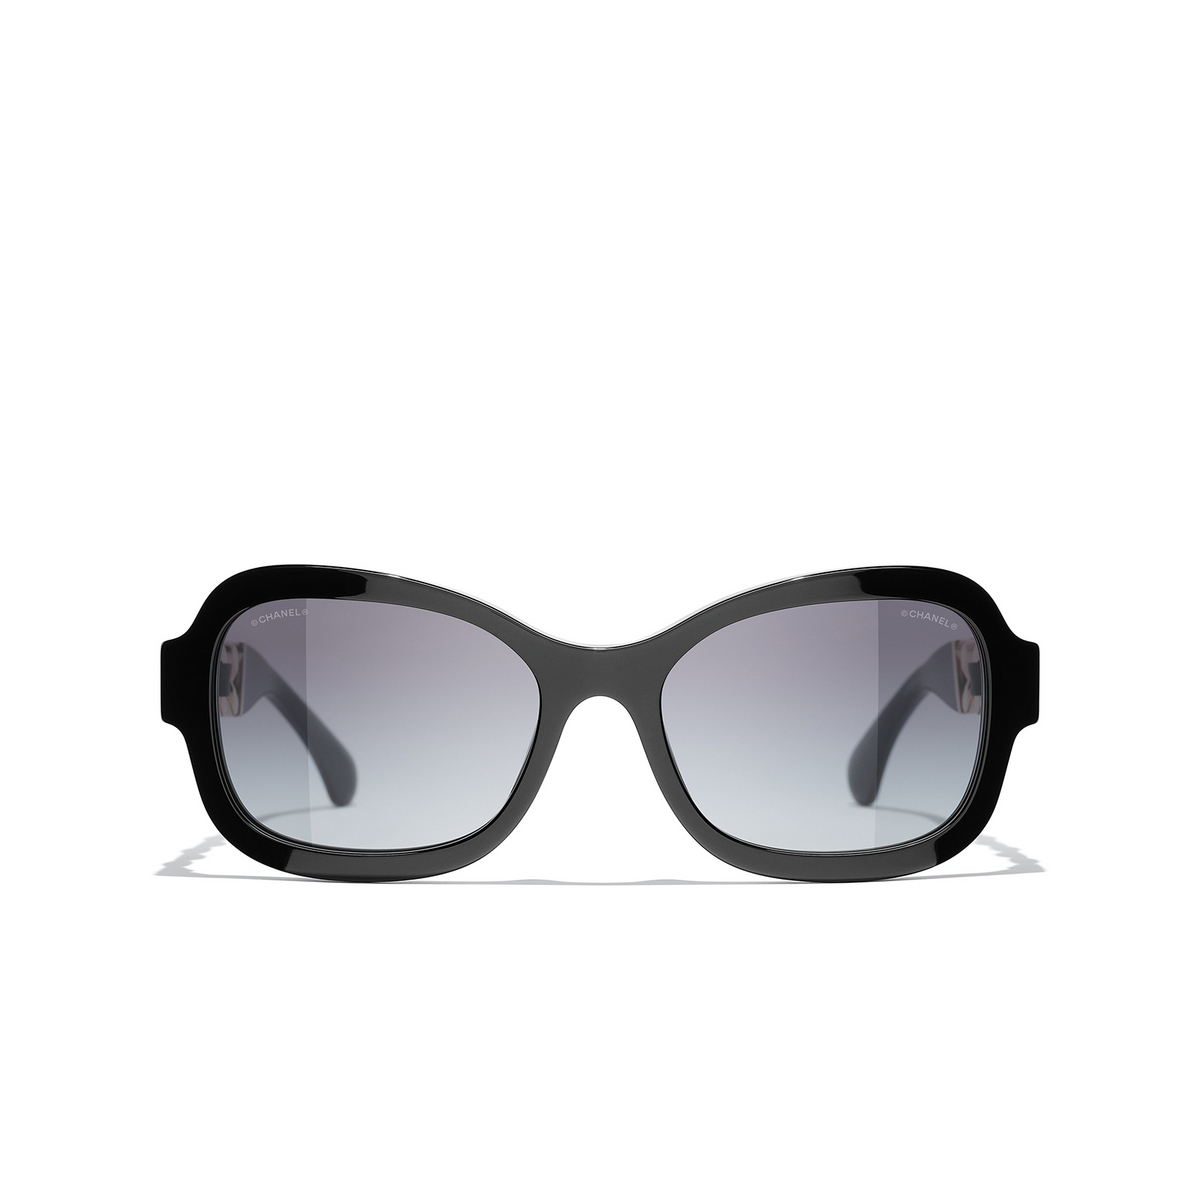 CHANEL rectangle Sunglasses C622S6 Black - front view